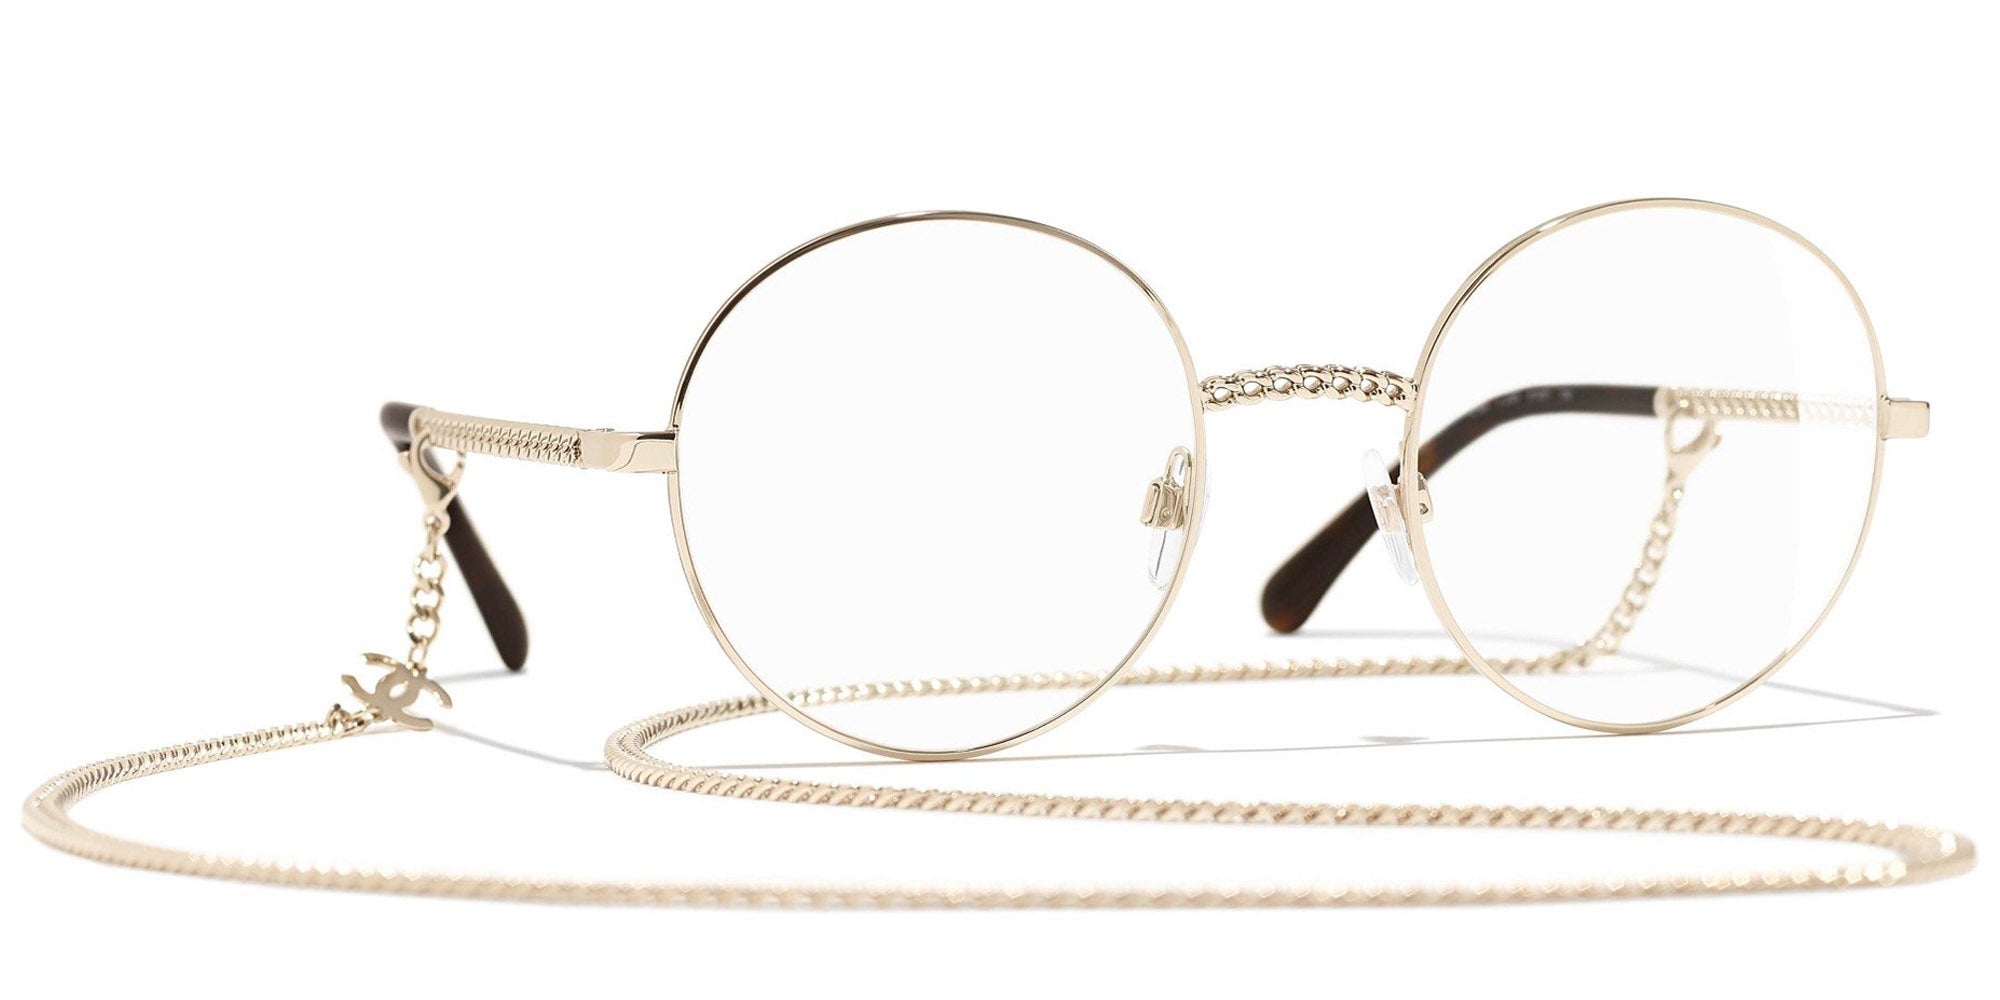 CHANEL, Accessories, Chanel Round Eyeglasses